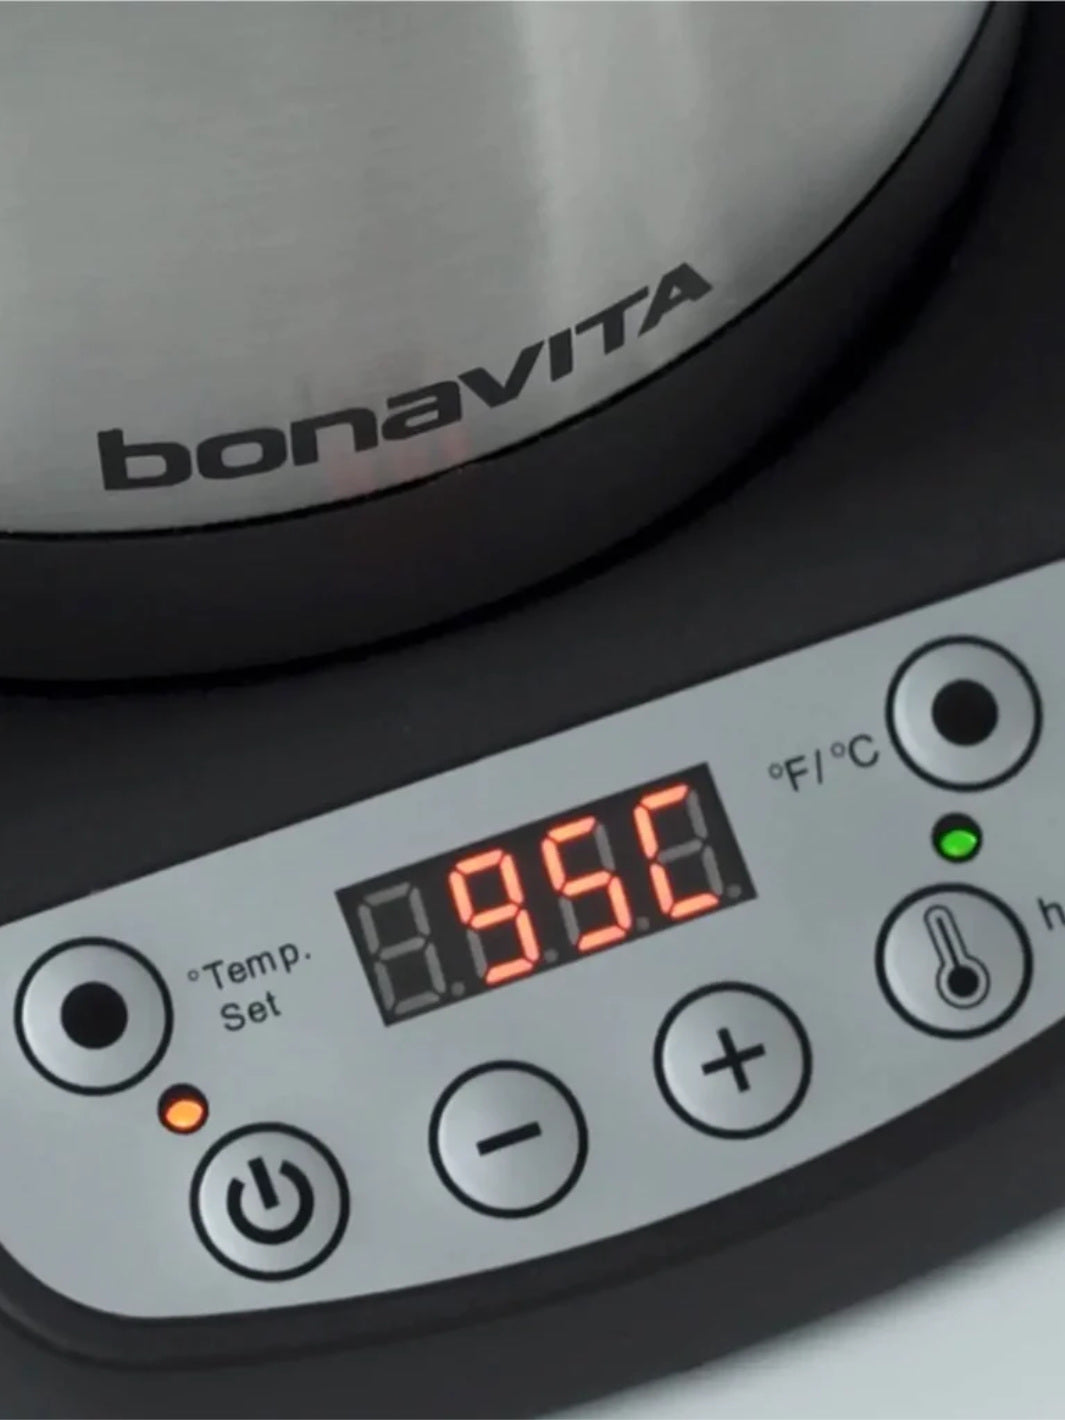 Bona Vita 1.0 Liter Digital Variable Temperature Kettle